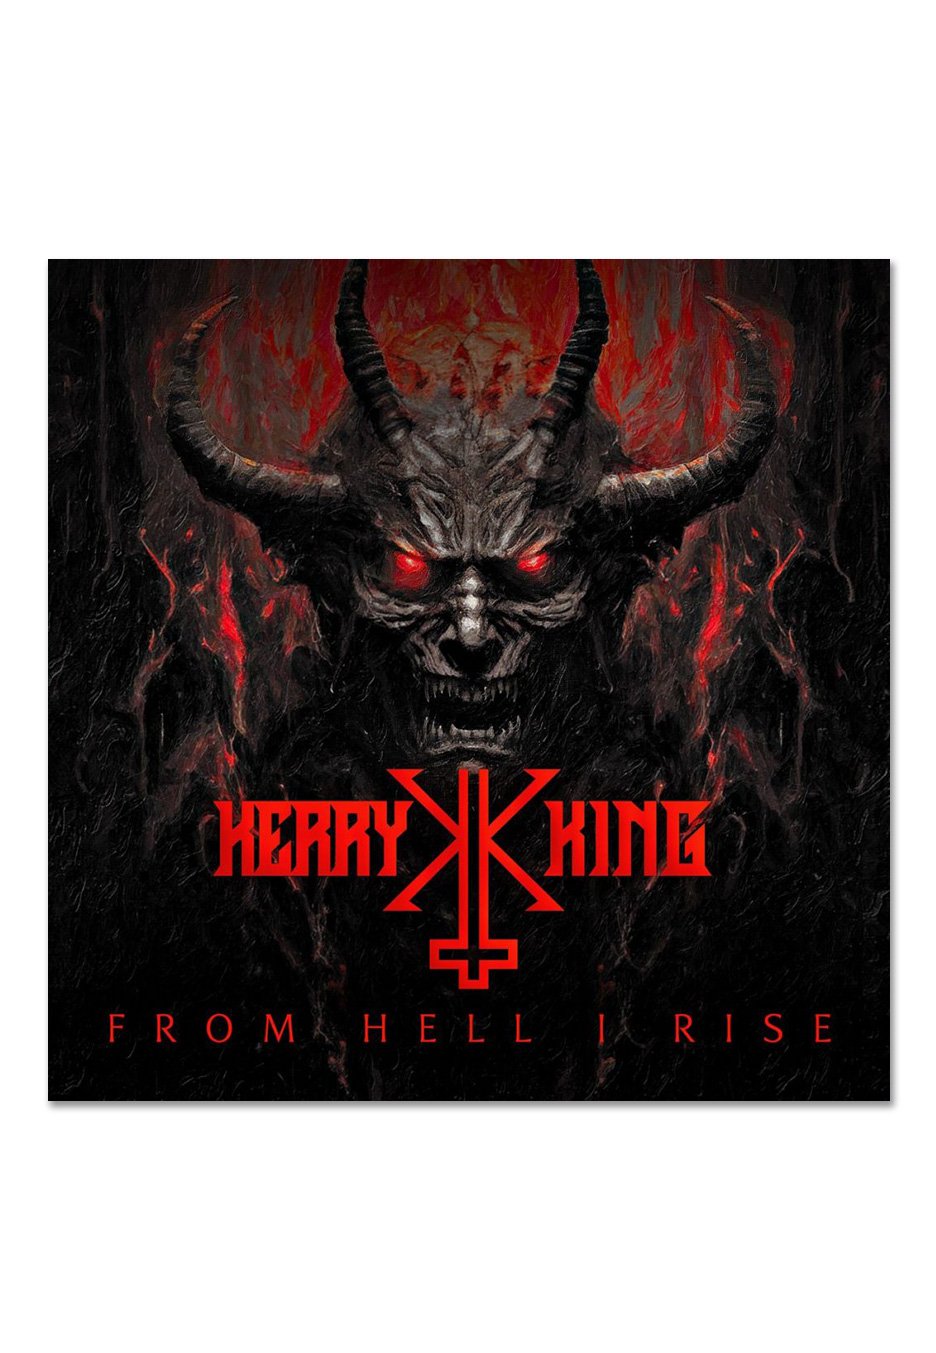 Kerry King - From Hell I Rise Ltd. Black/Dark Red - Marbled Vinyl